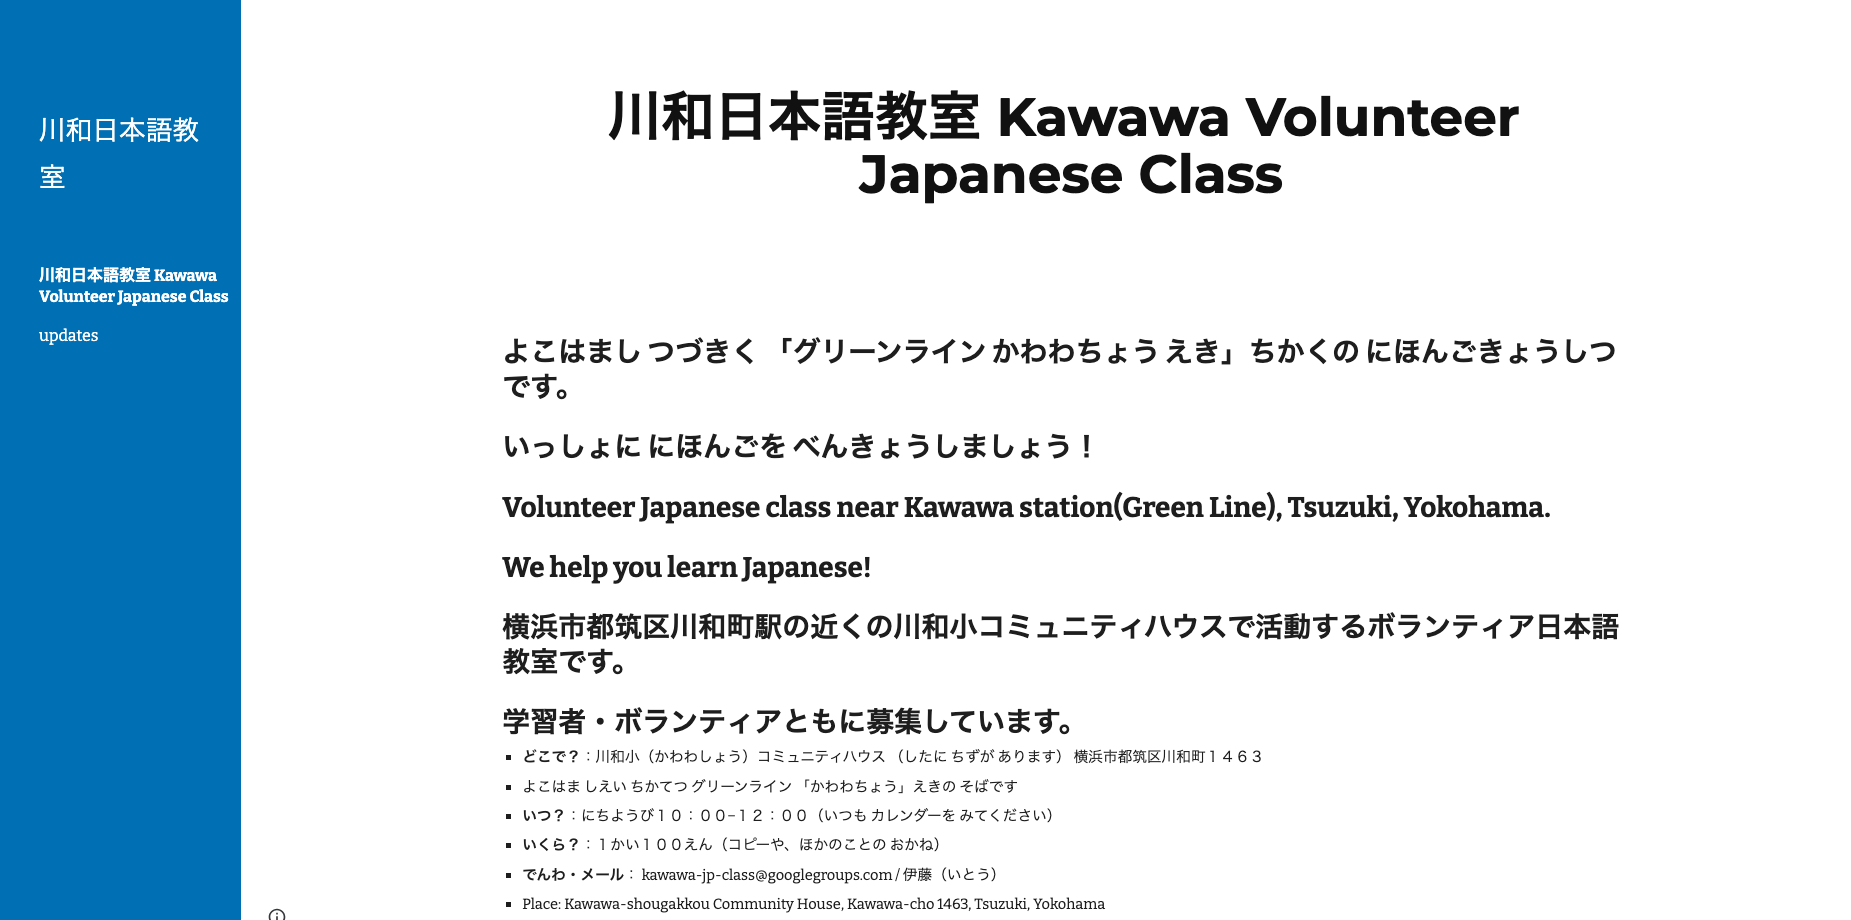 Kawawa Volunteer Japanese Class